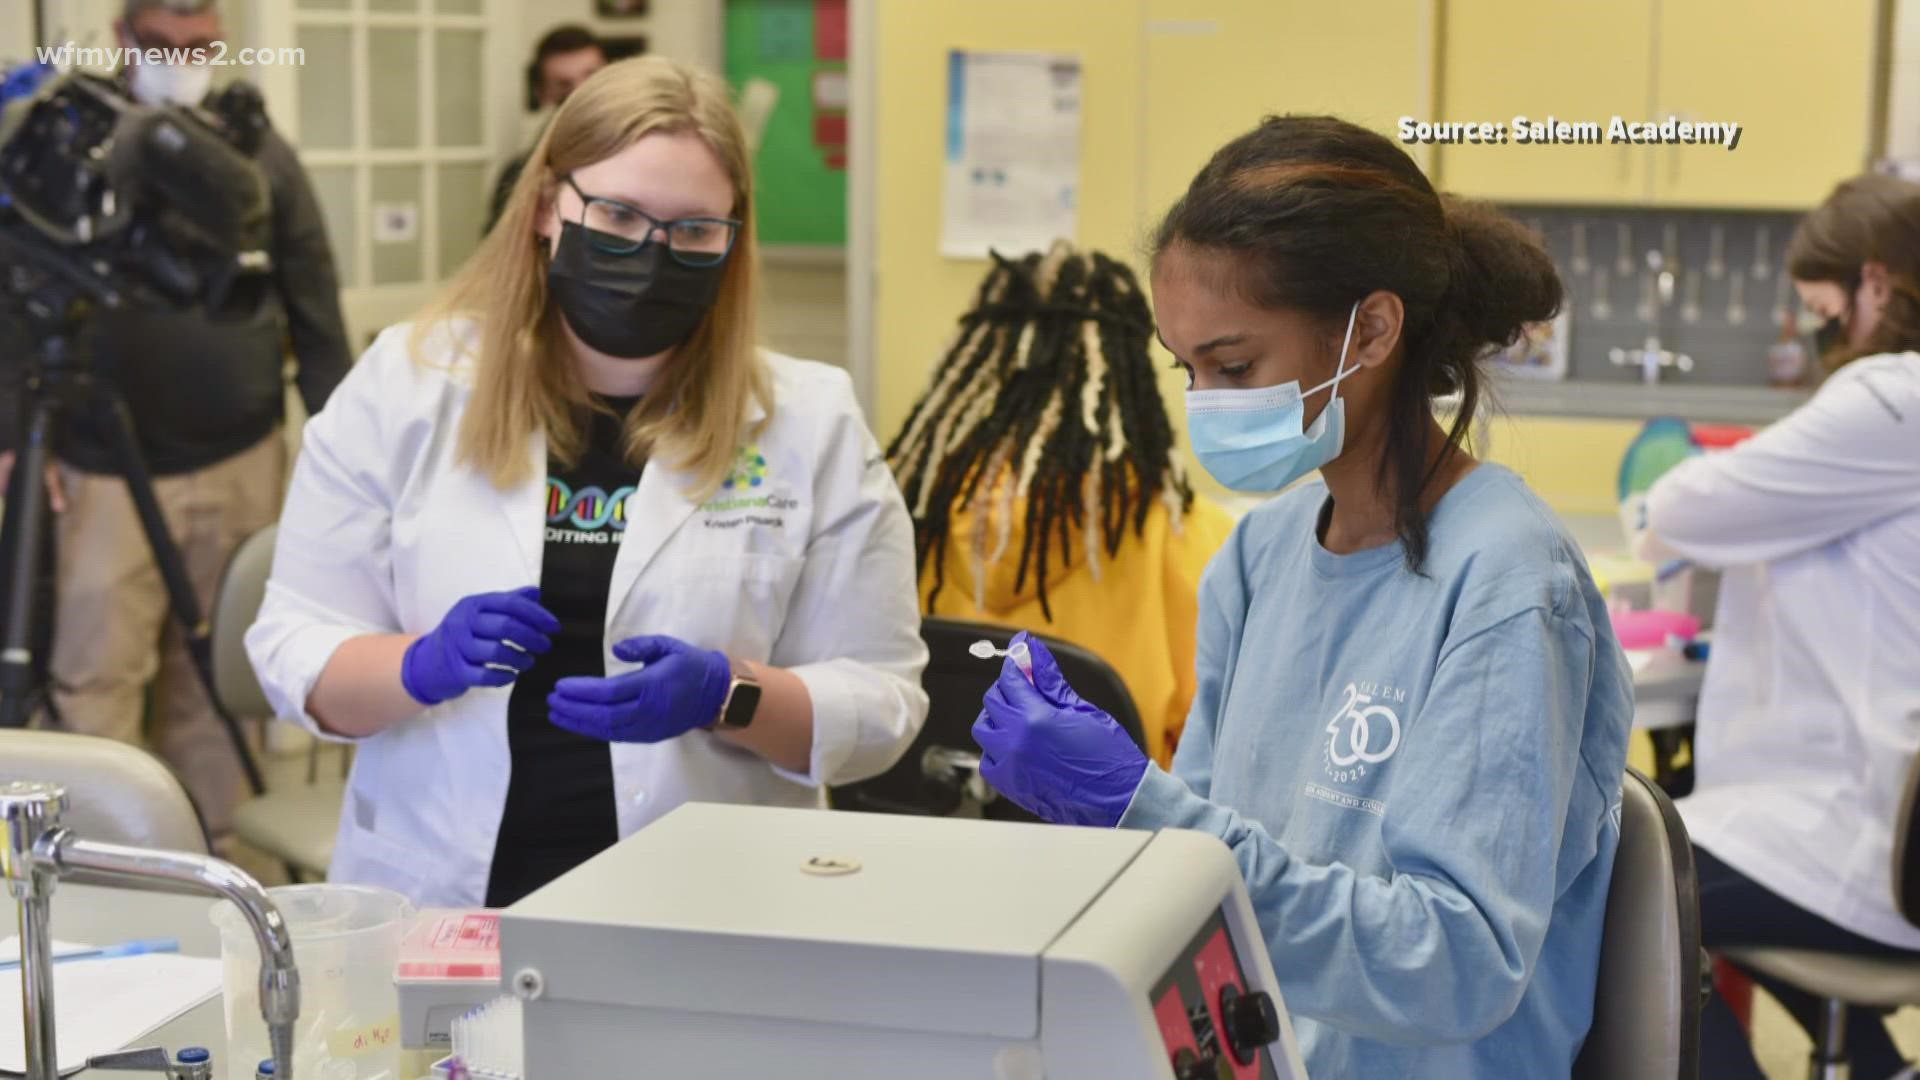 Salem Academy high school students are learning gene editing using “Crisper in a box.”